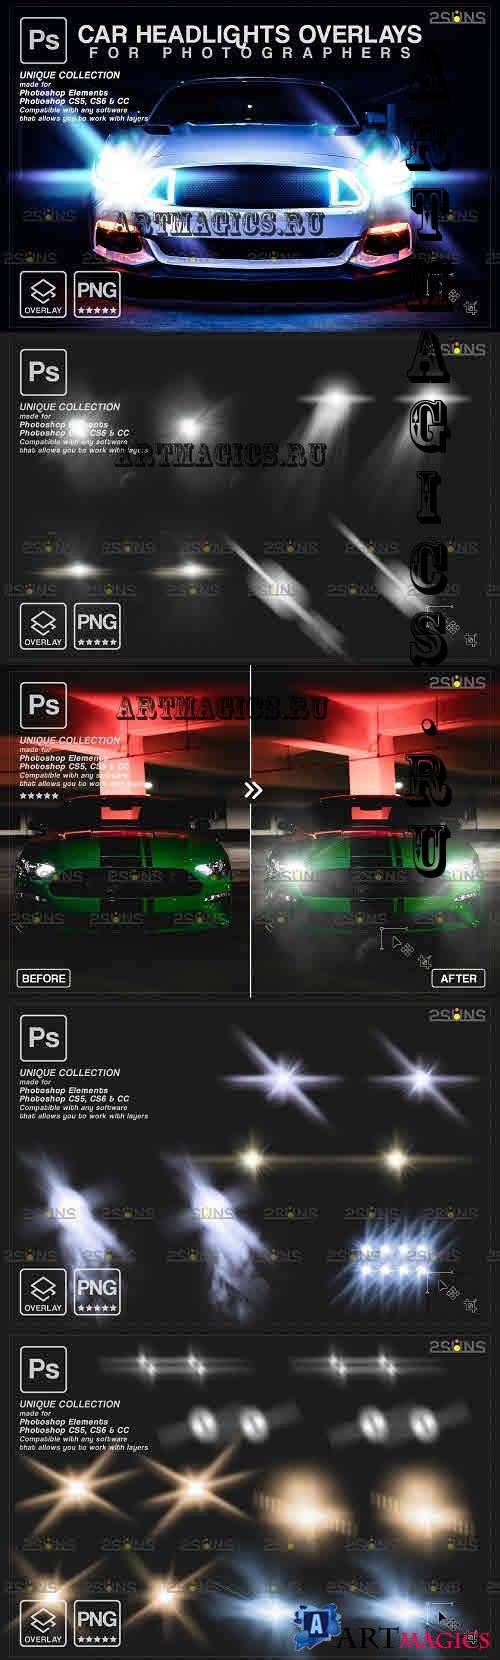 Car Headlights Photo Overlays V1 - 10943824